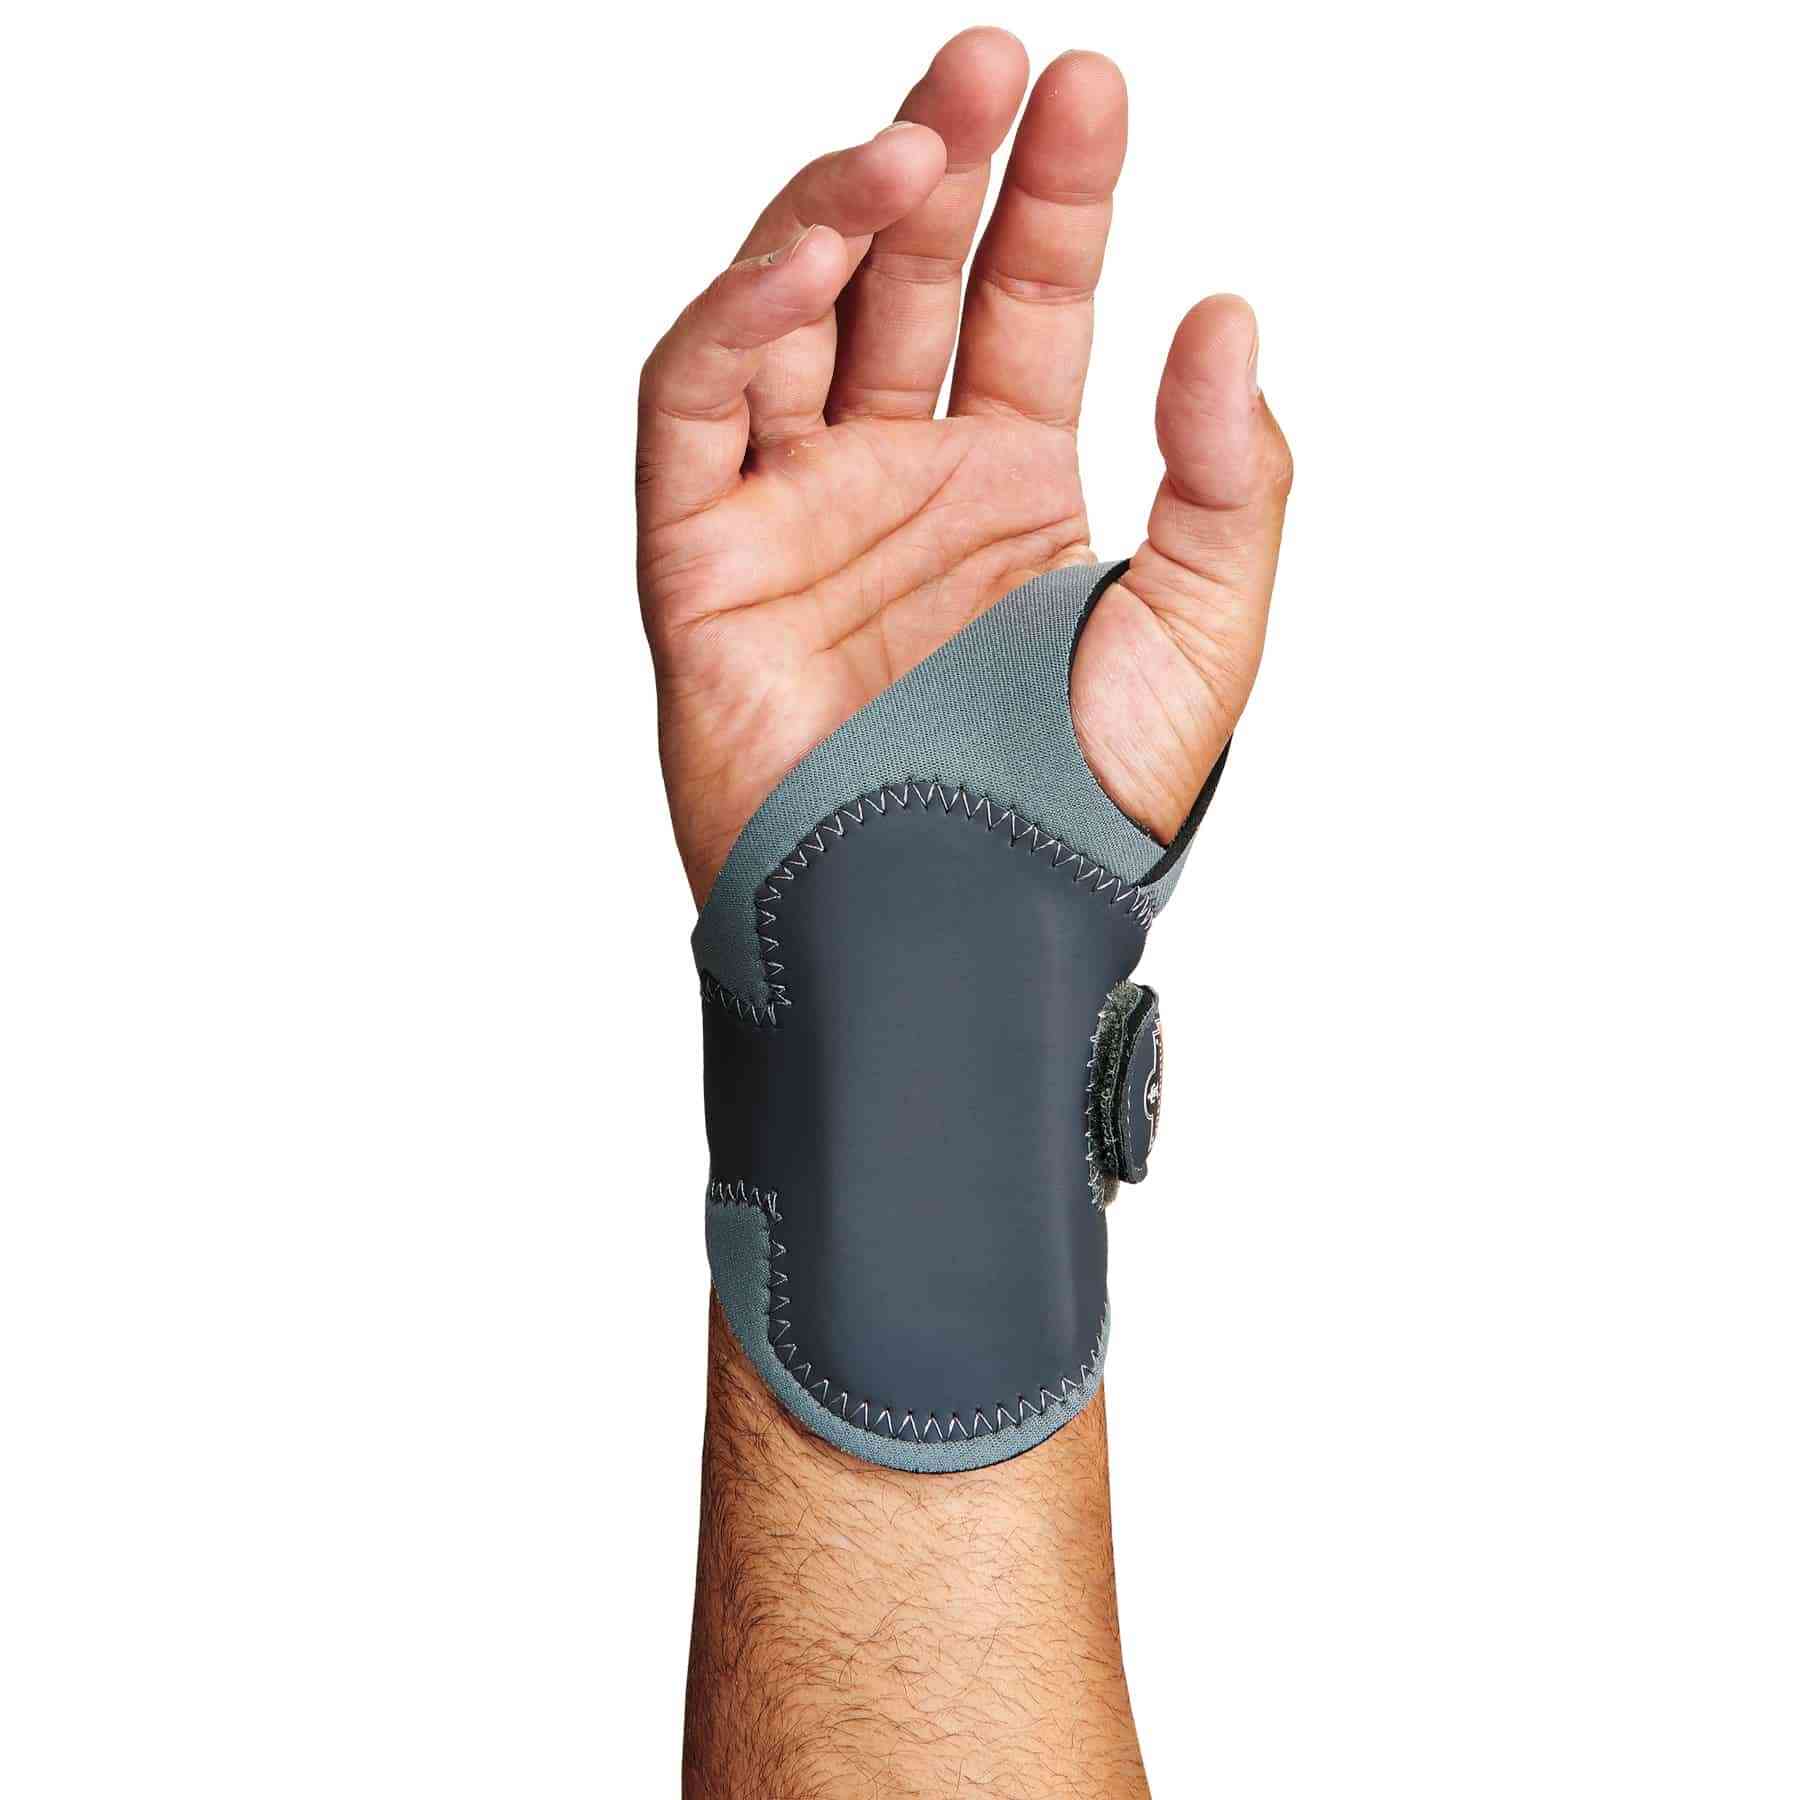 Lightweight Wrist Support - Wrist Supports